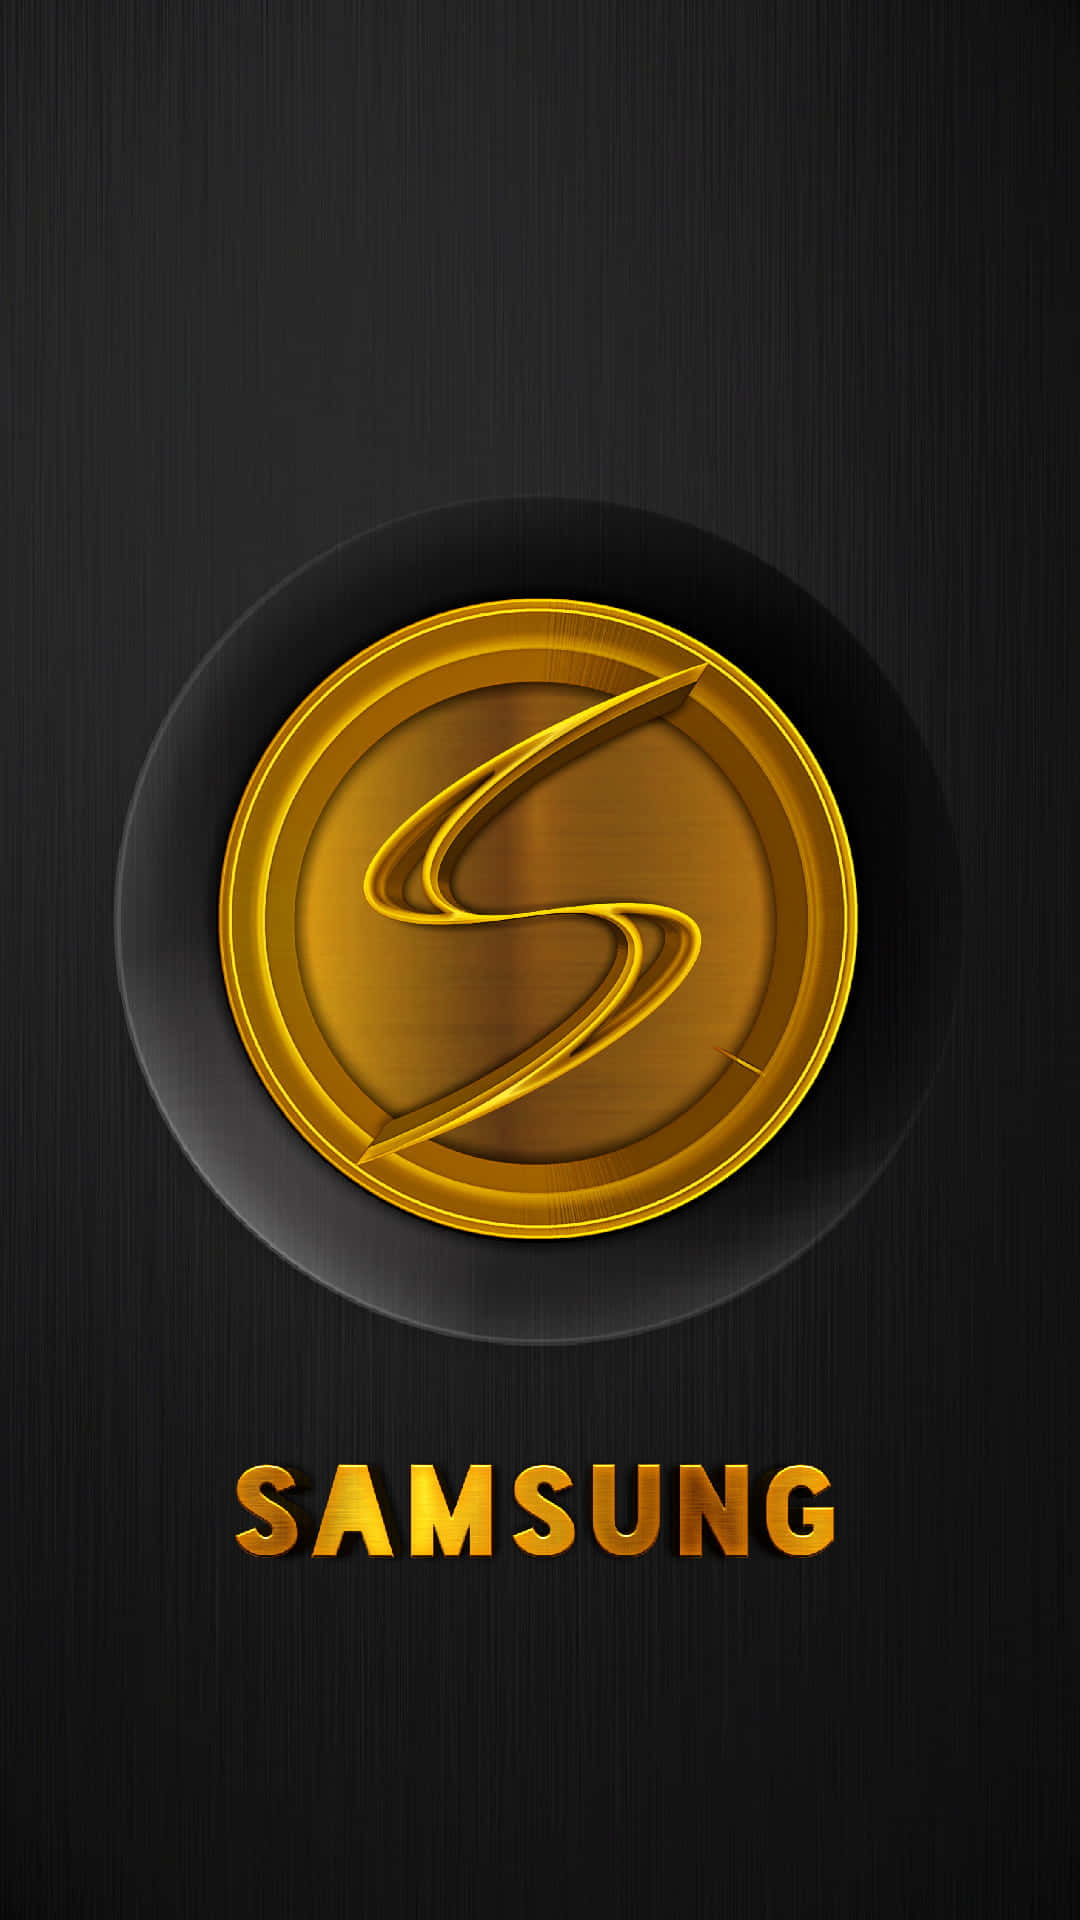 Samsung's Latest, The Galaxy S Wallpaper